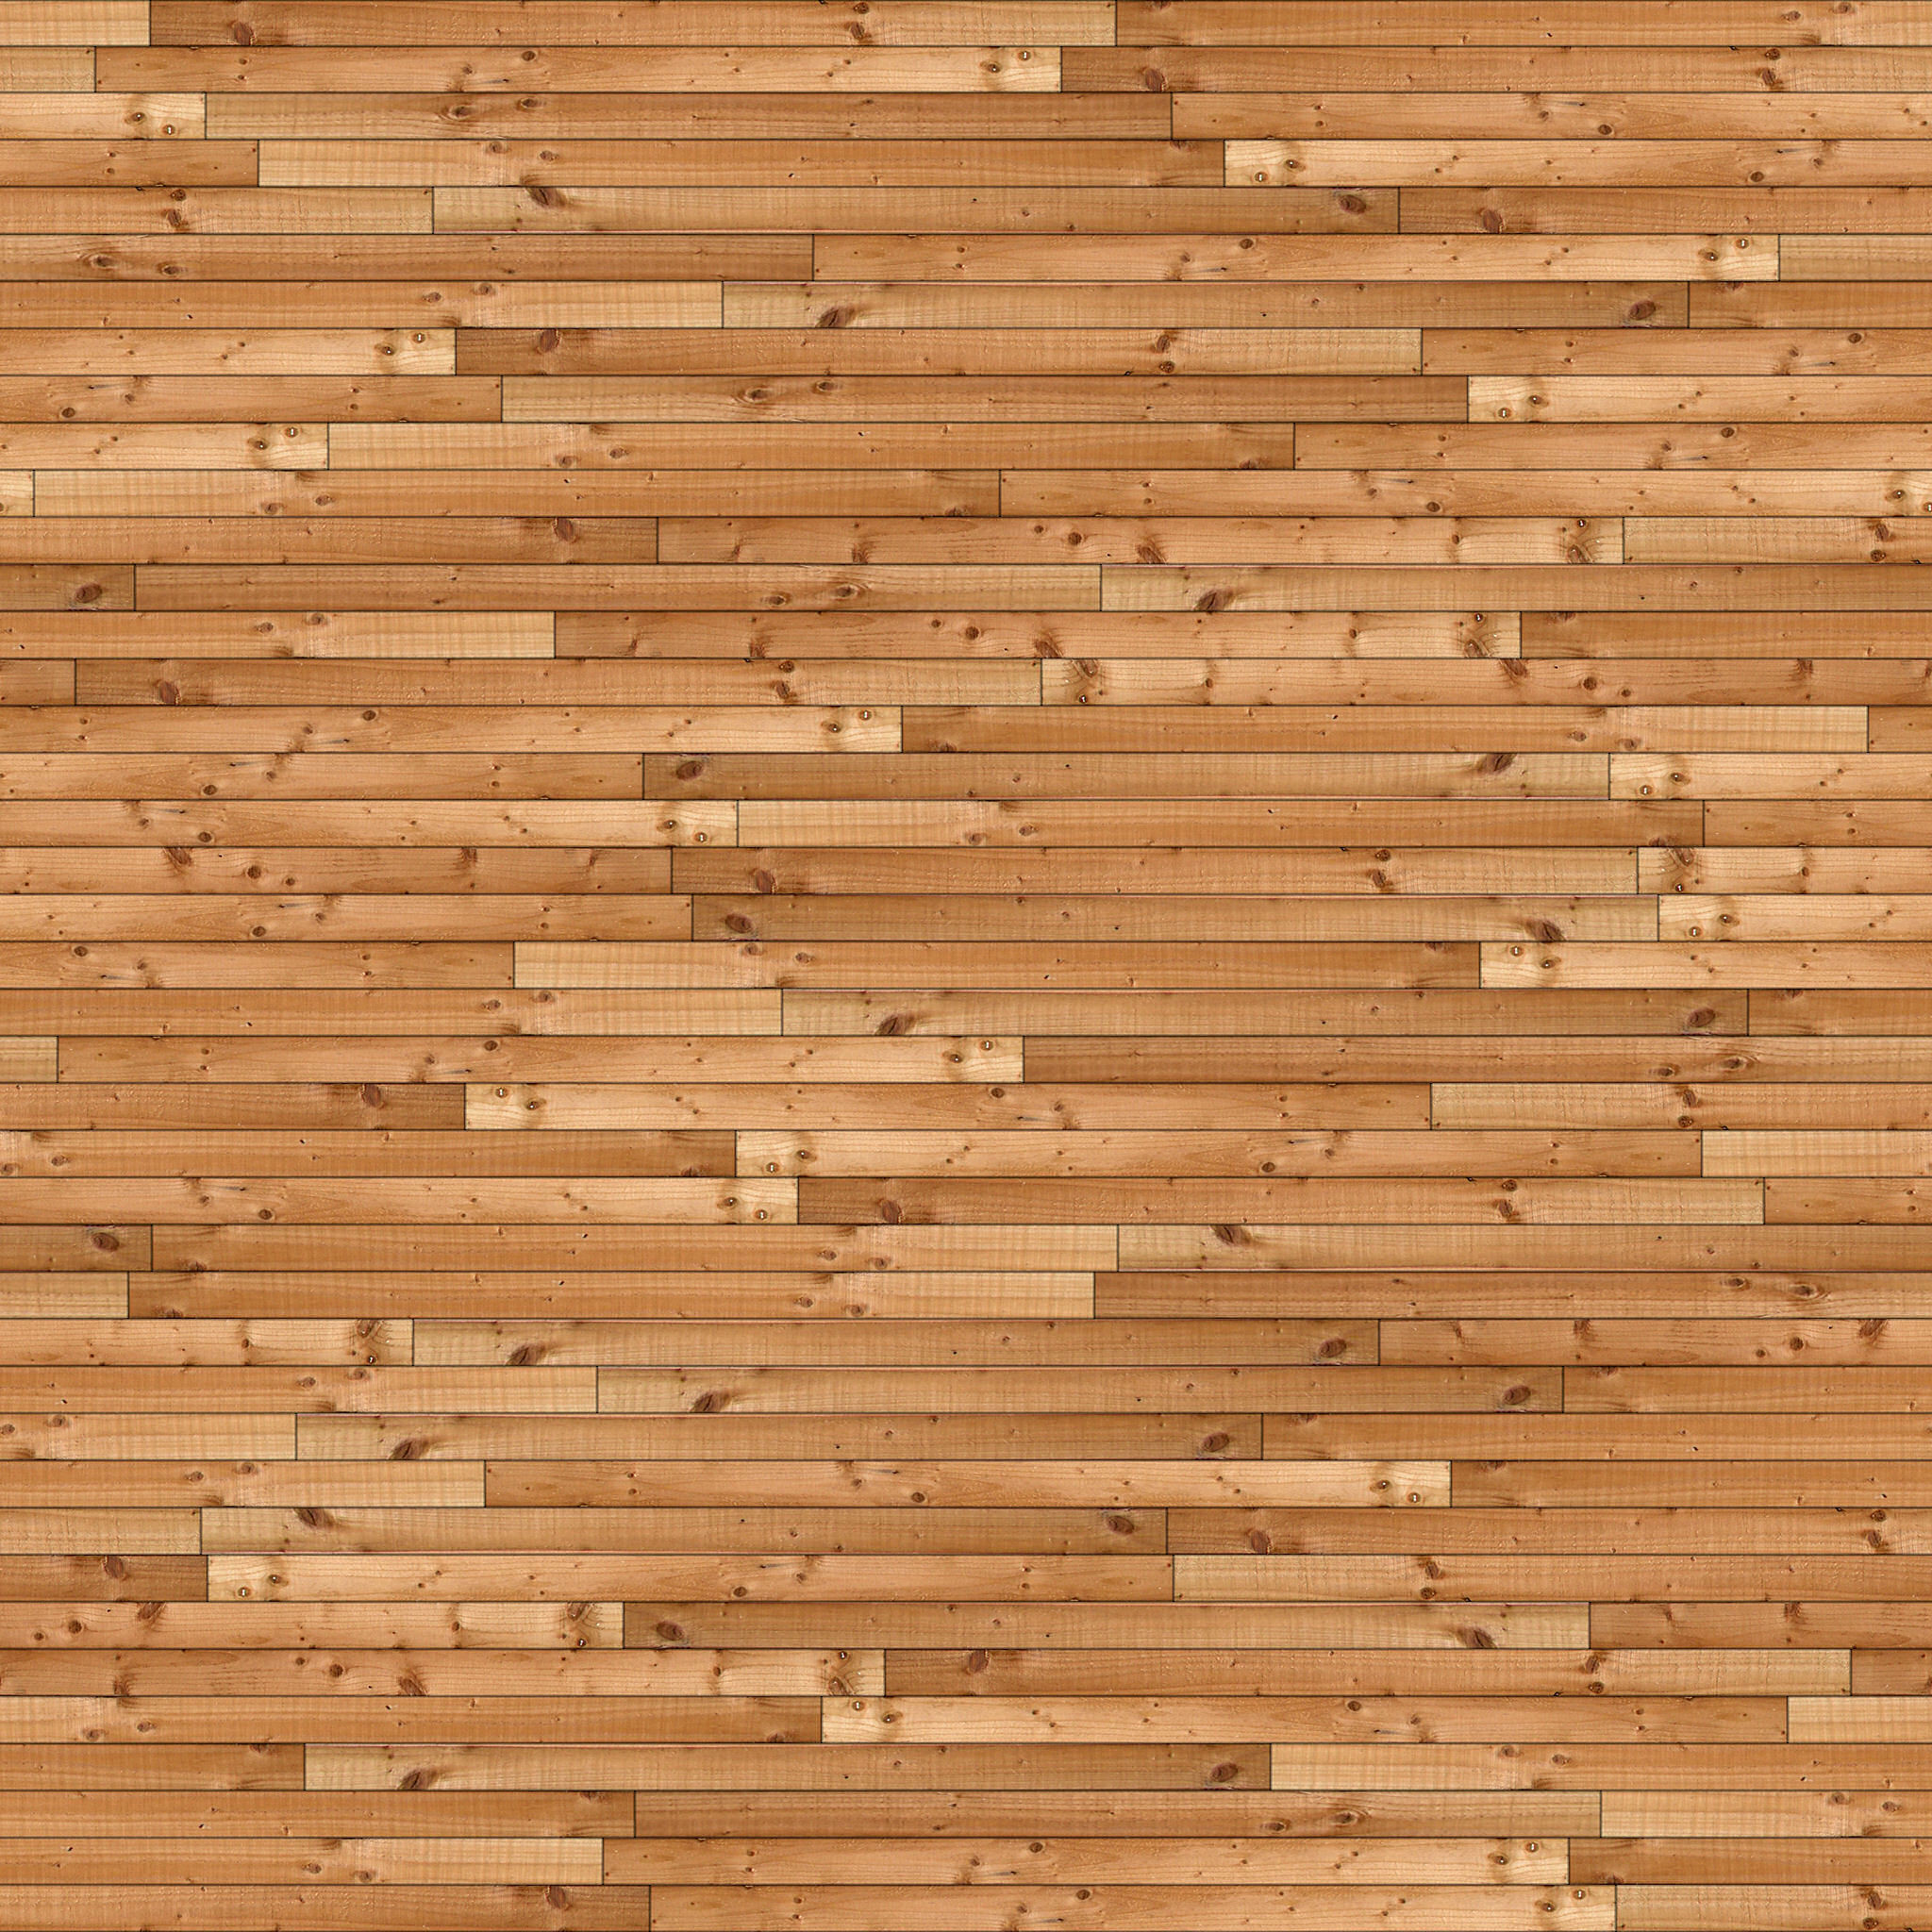 2048x2048 Wood Floor Texture http://www.woodesigner.net provides fantastic guidance as